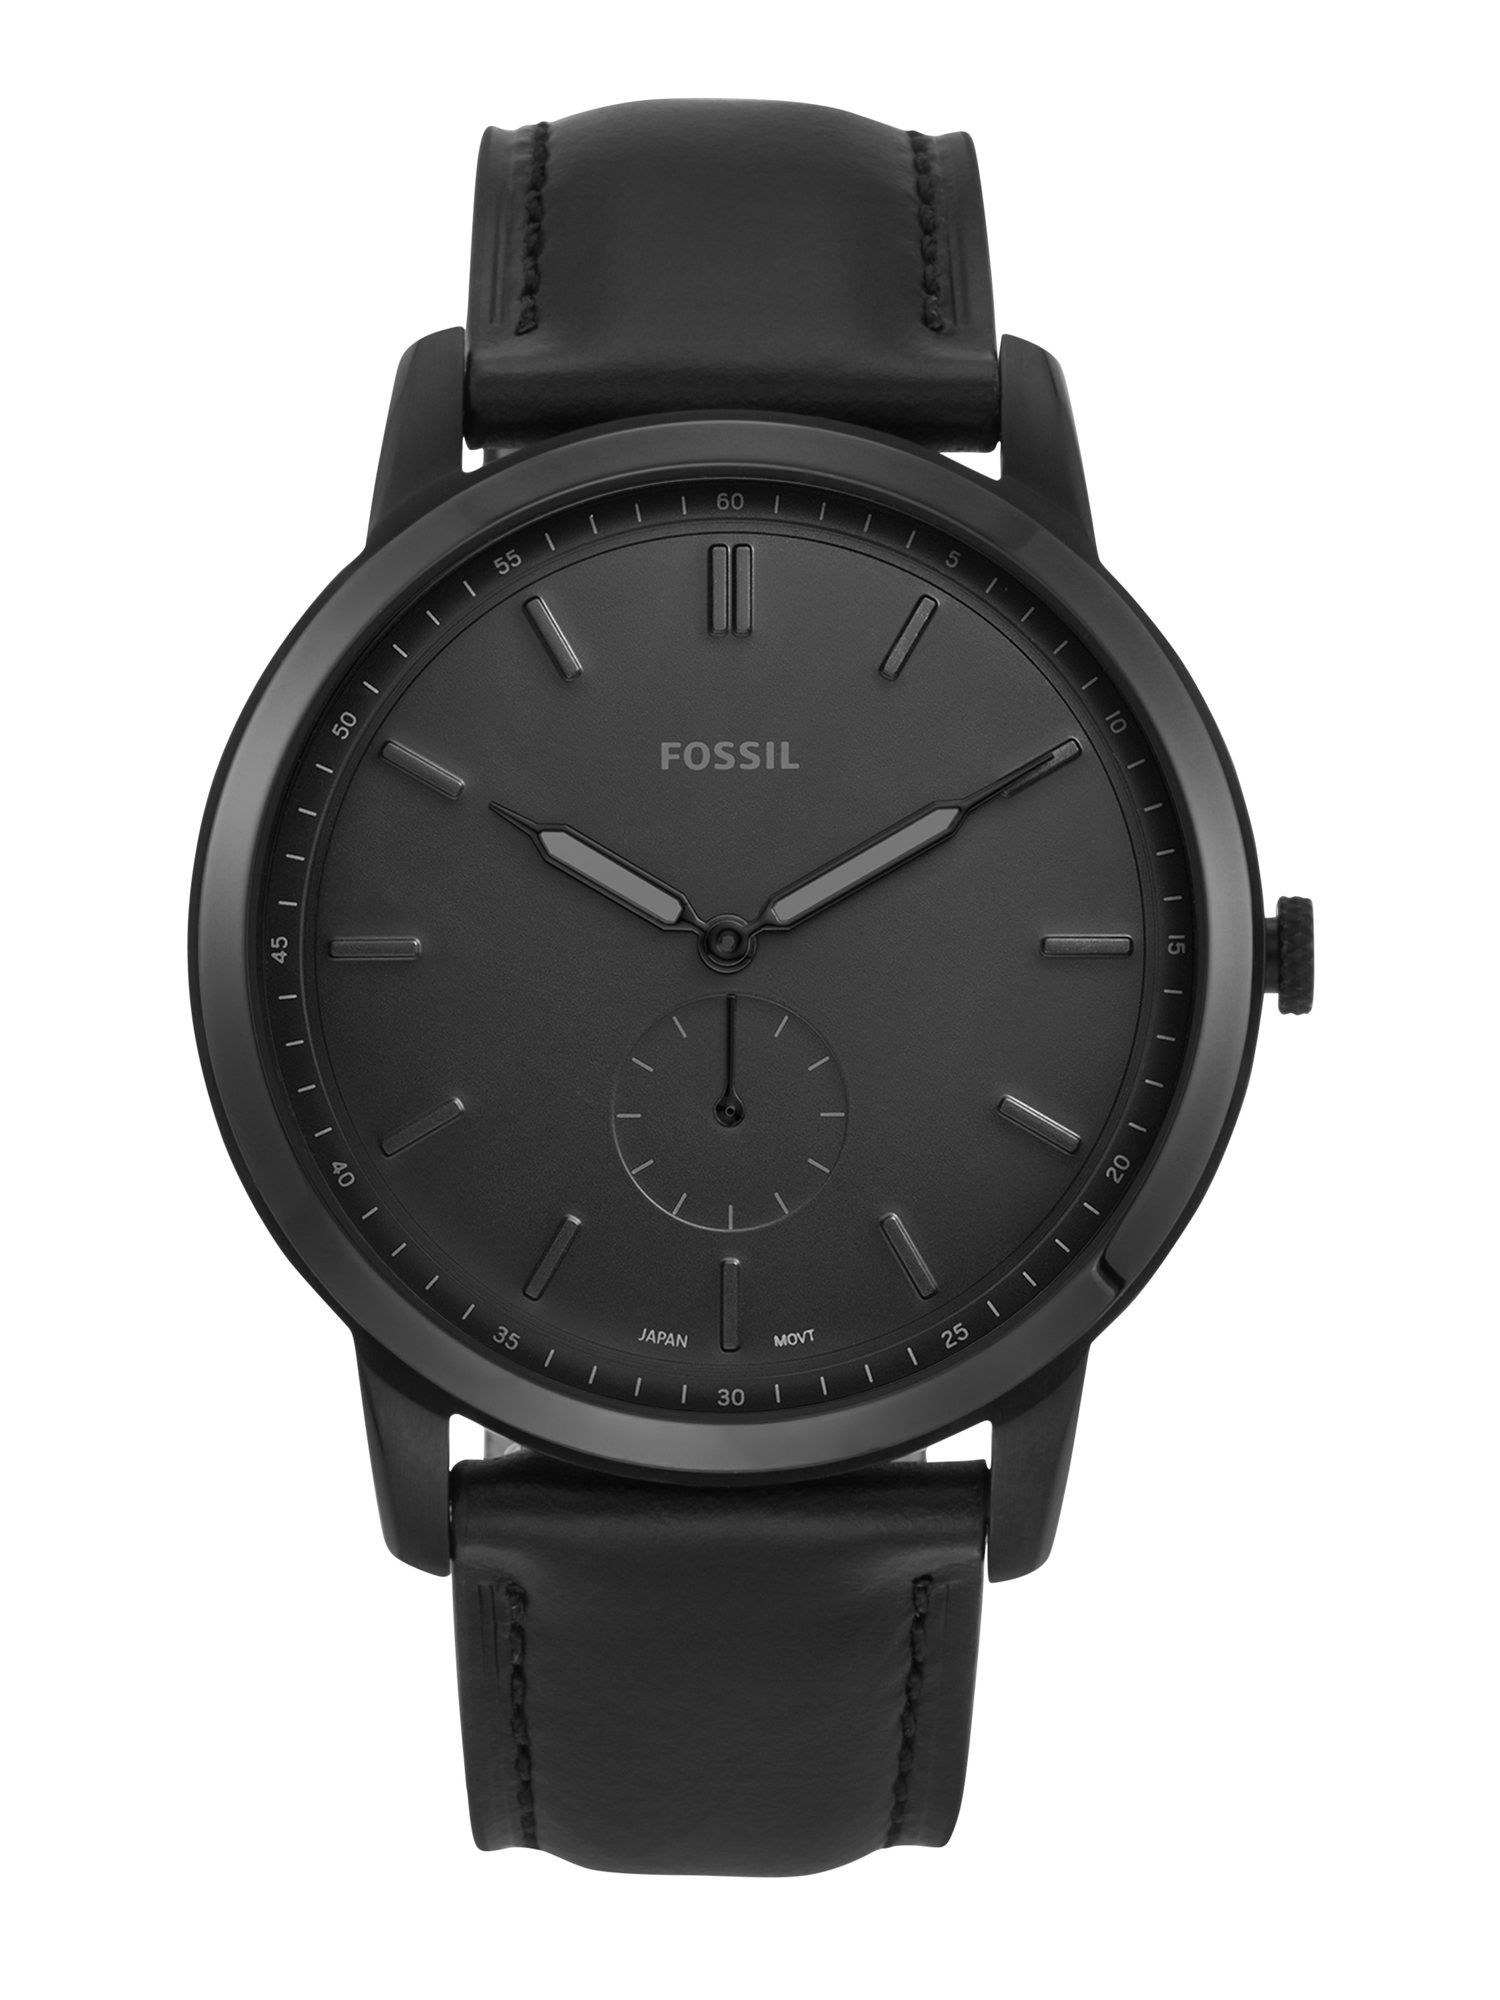 Fossil FS5447 The Minimalist - Mono Black Watch For Men